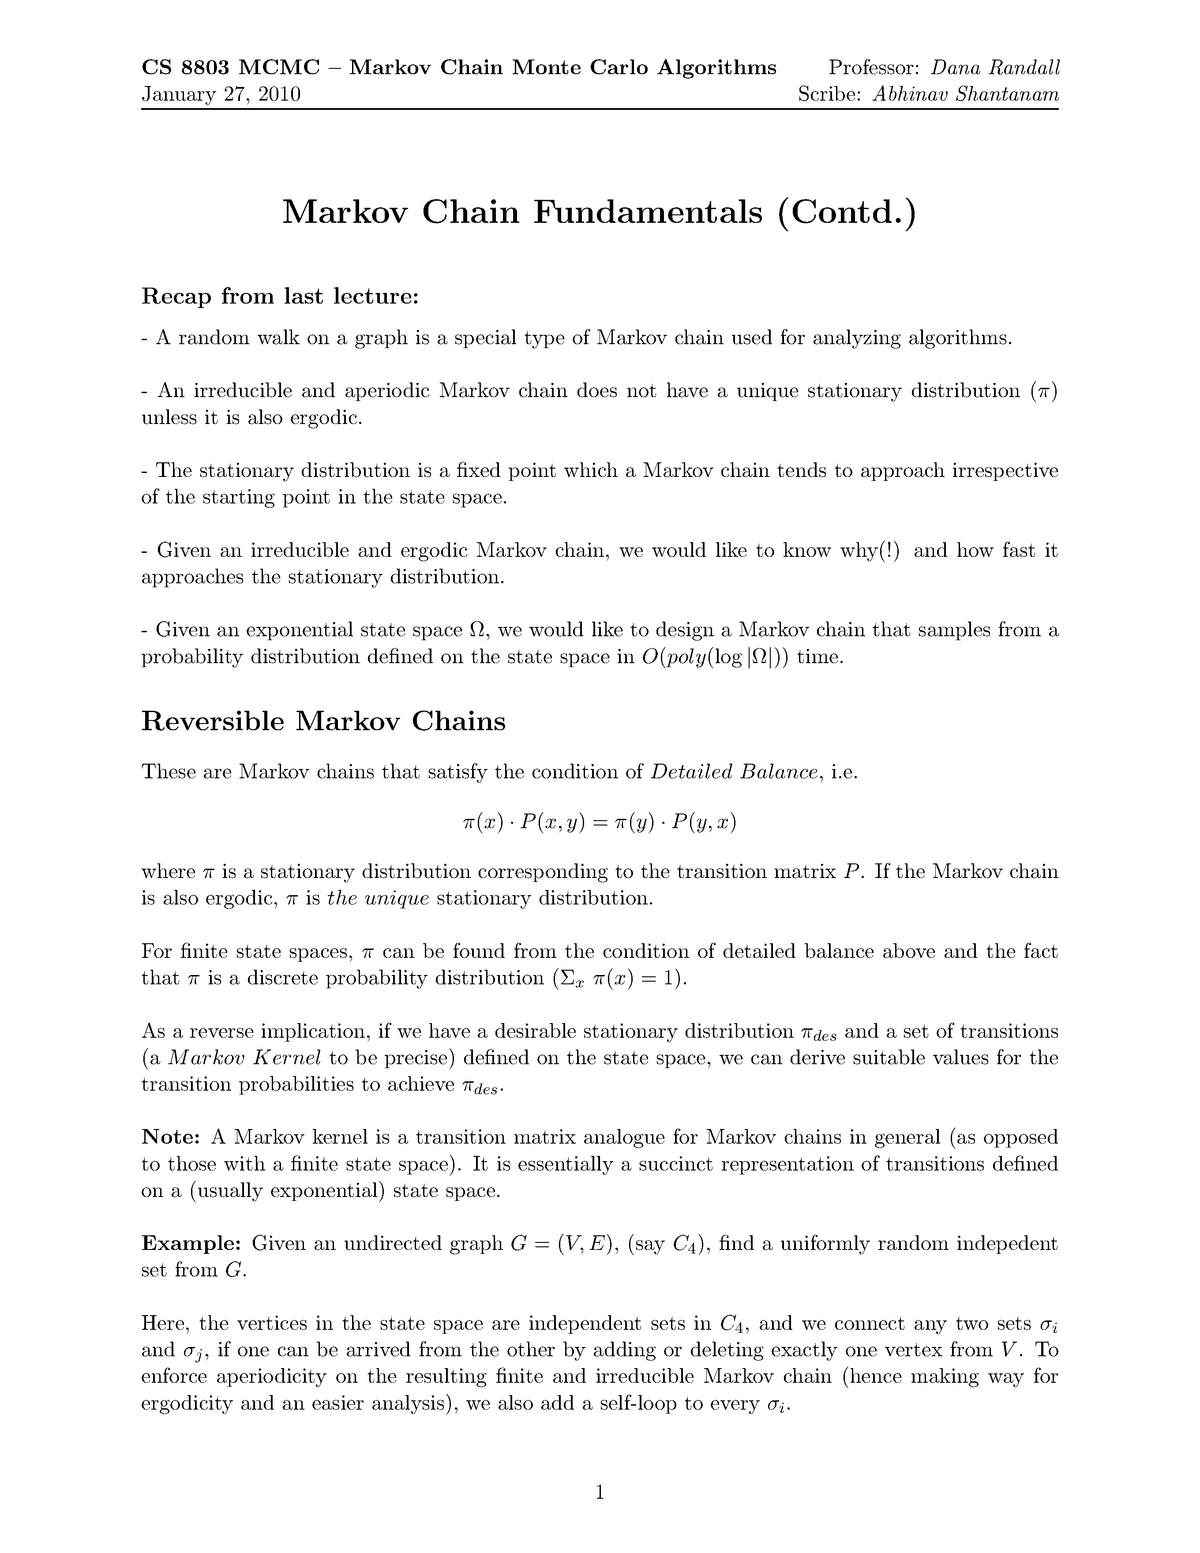 Markov Chain Fundamentals Contd Uofm Studocu